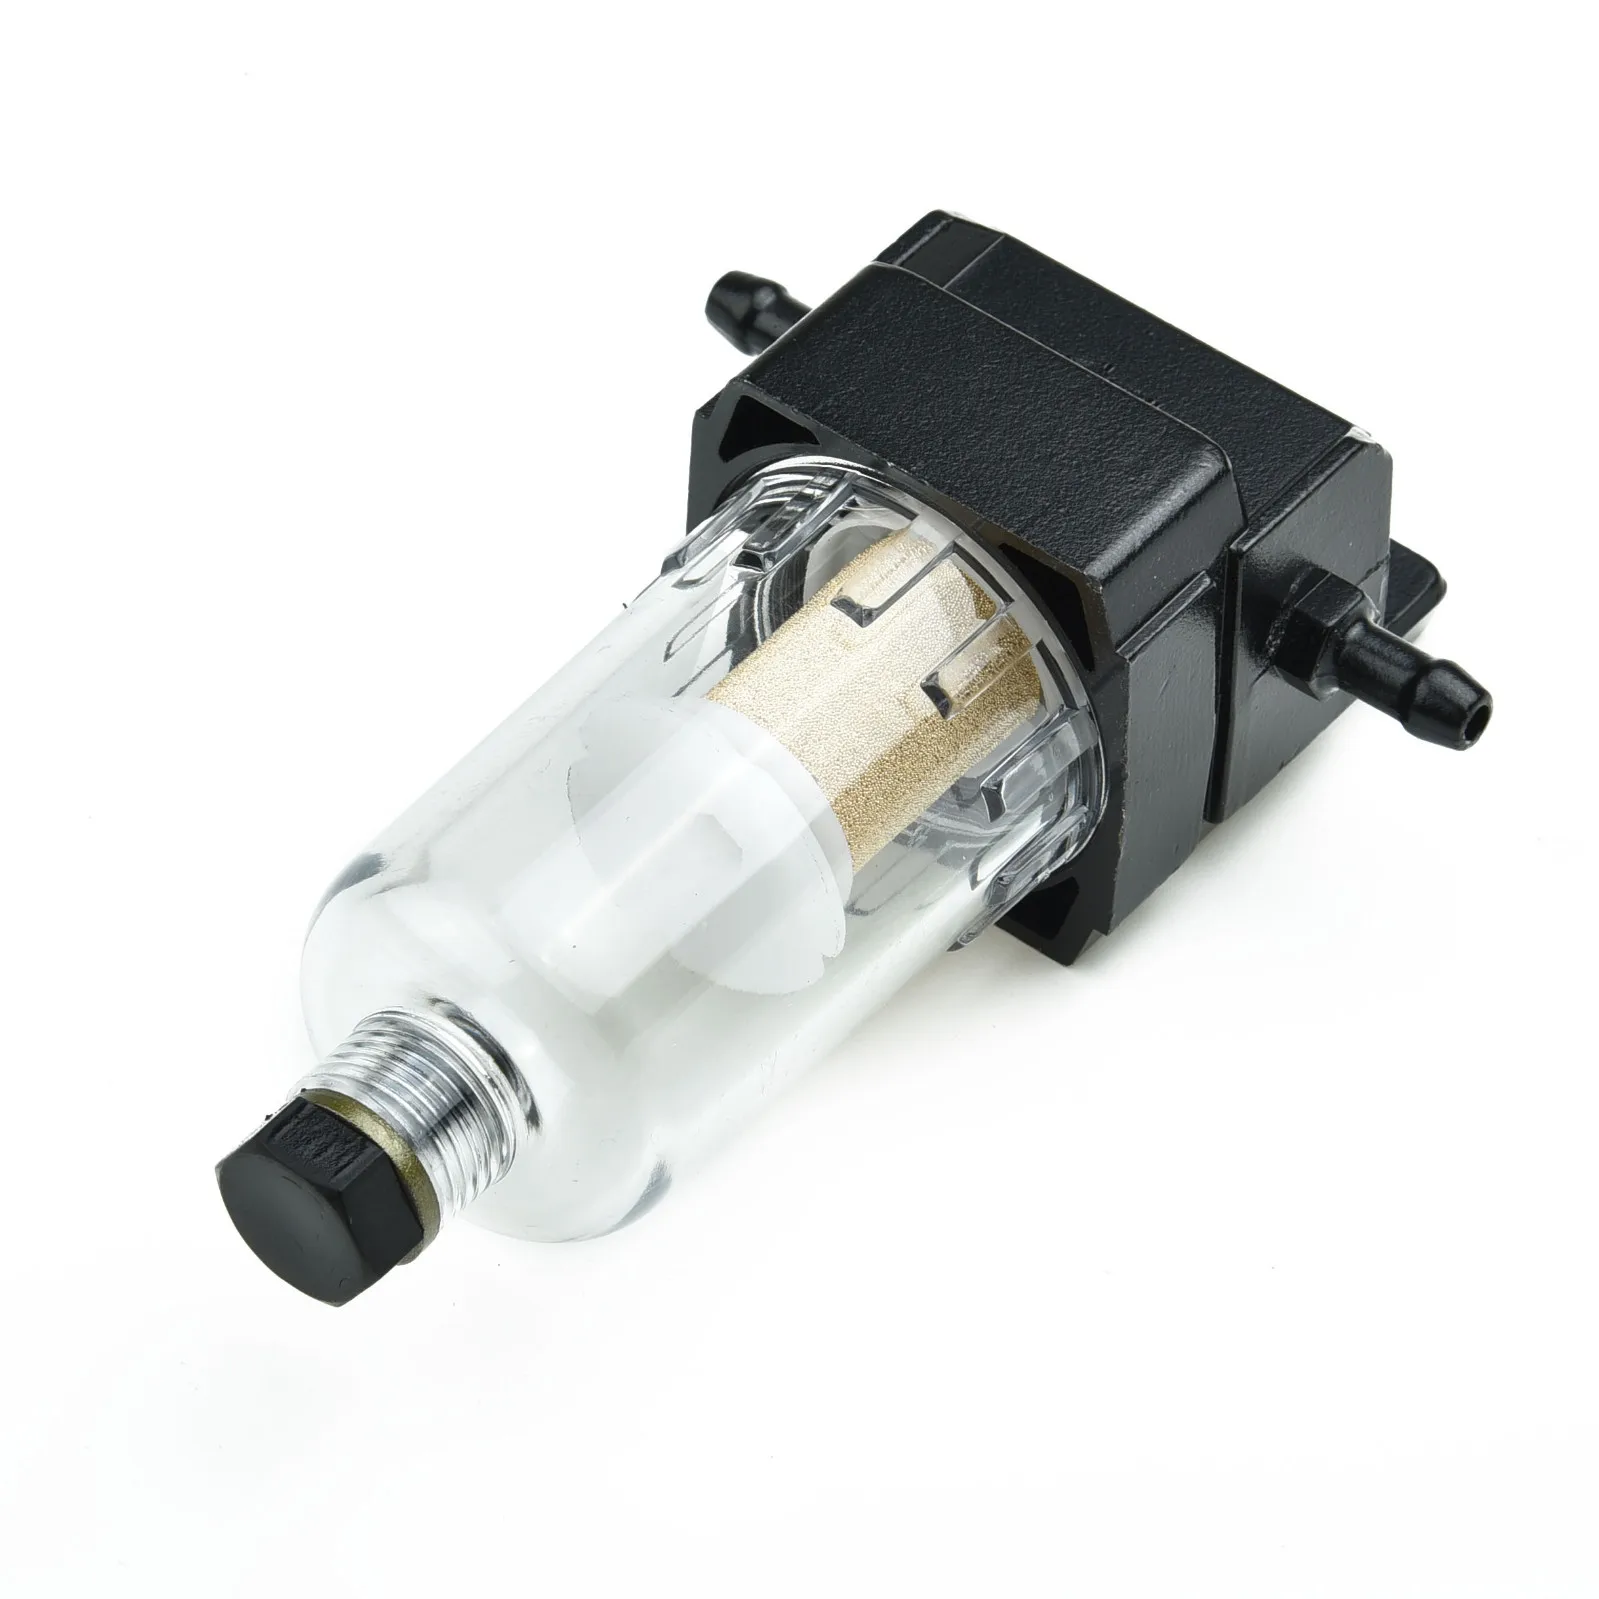 

1PC Fuel Filter / Water Separator Kit (Diesel & Biodiesel)Fuel Filter For Webasto/Espar Heaters Replacement Car Accessories